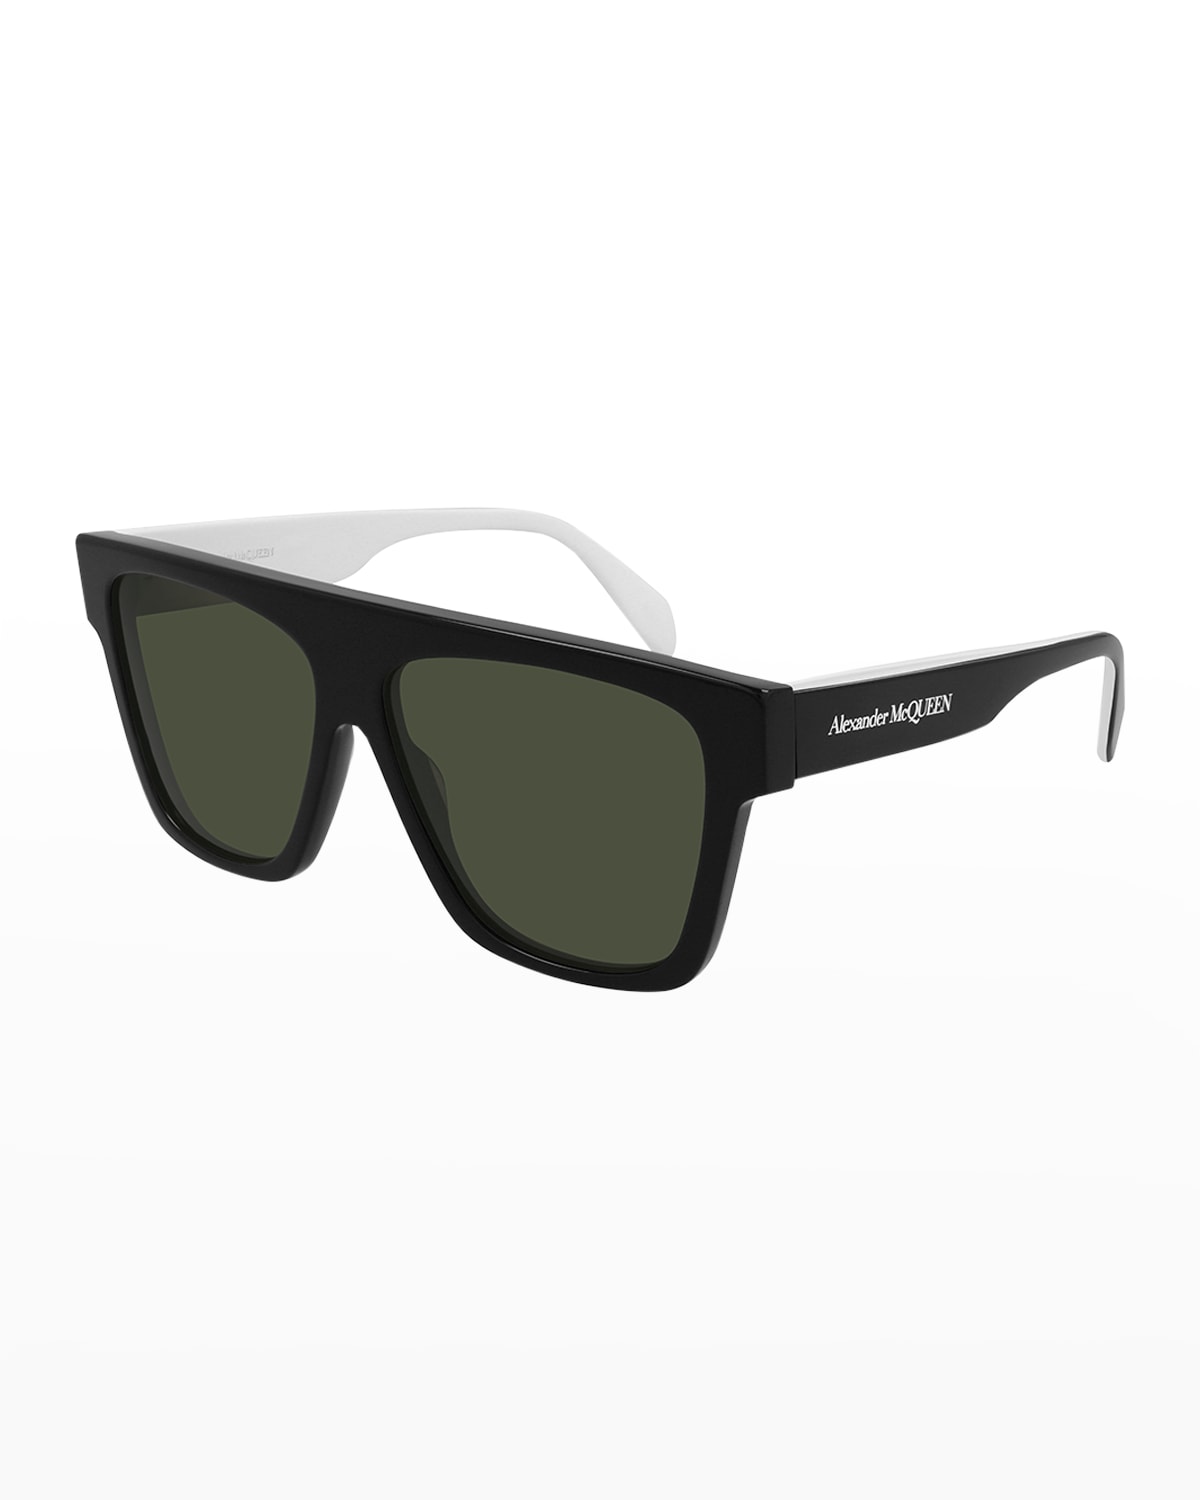 Men's Flat Top Squared Acetate Sunglasses